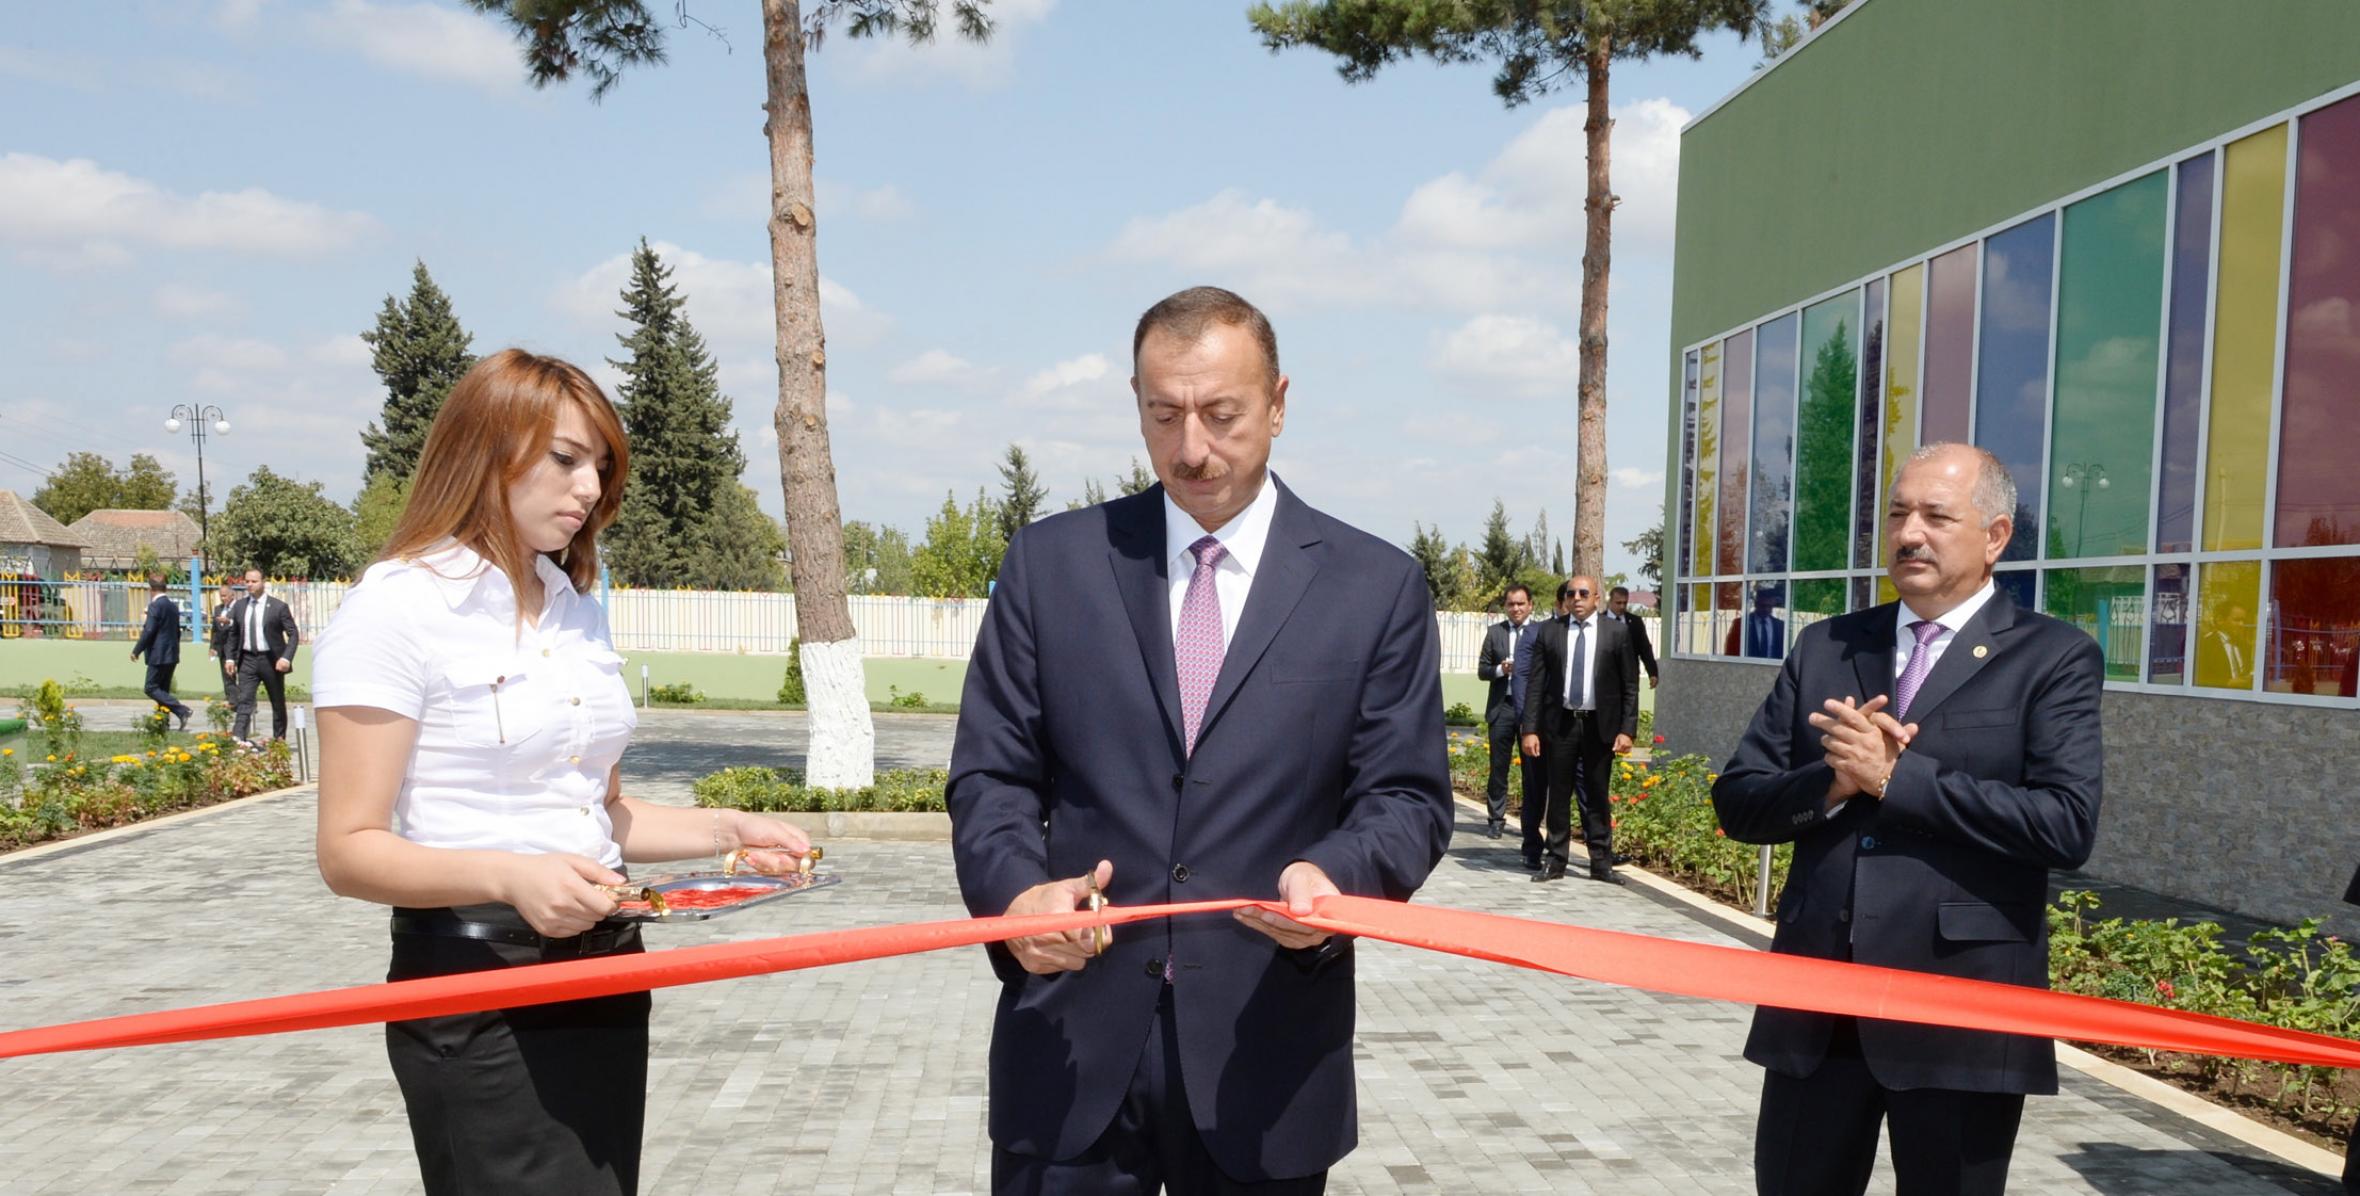 Ilham Aliyev attended the opening of nursery school and kindergarten "Fidan" in Jalilabad